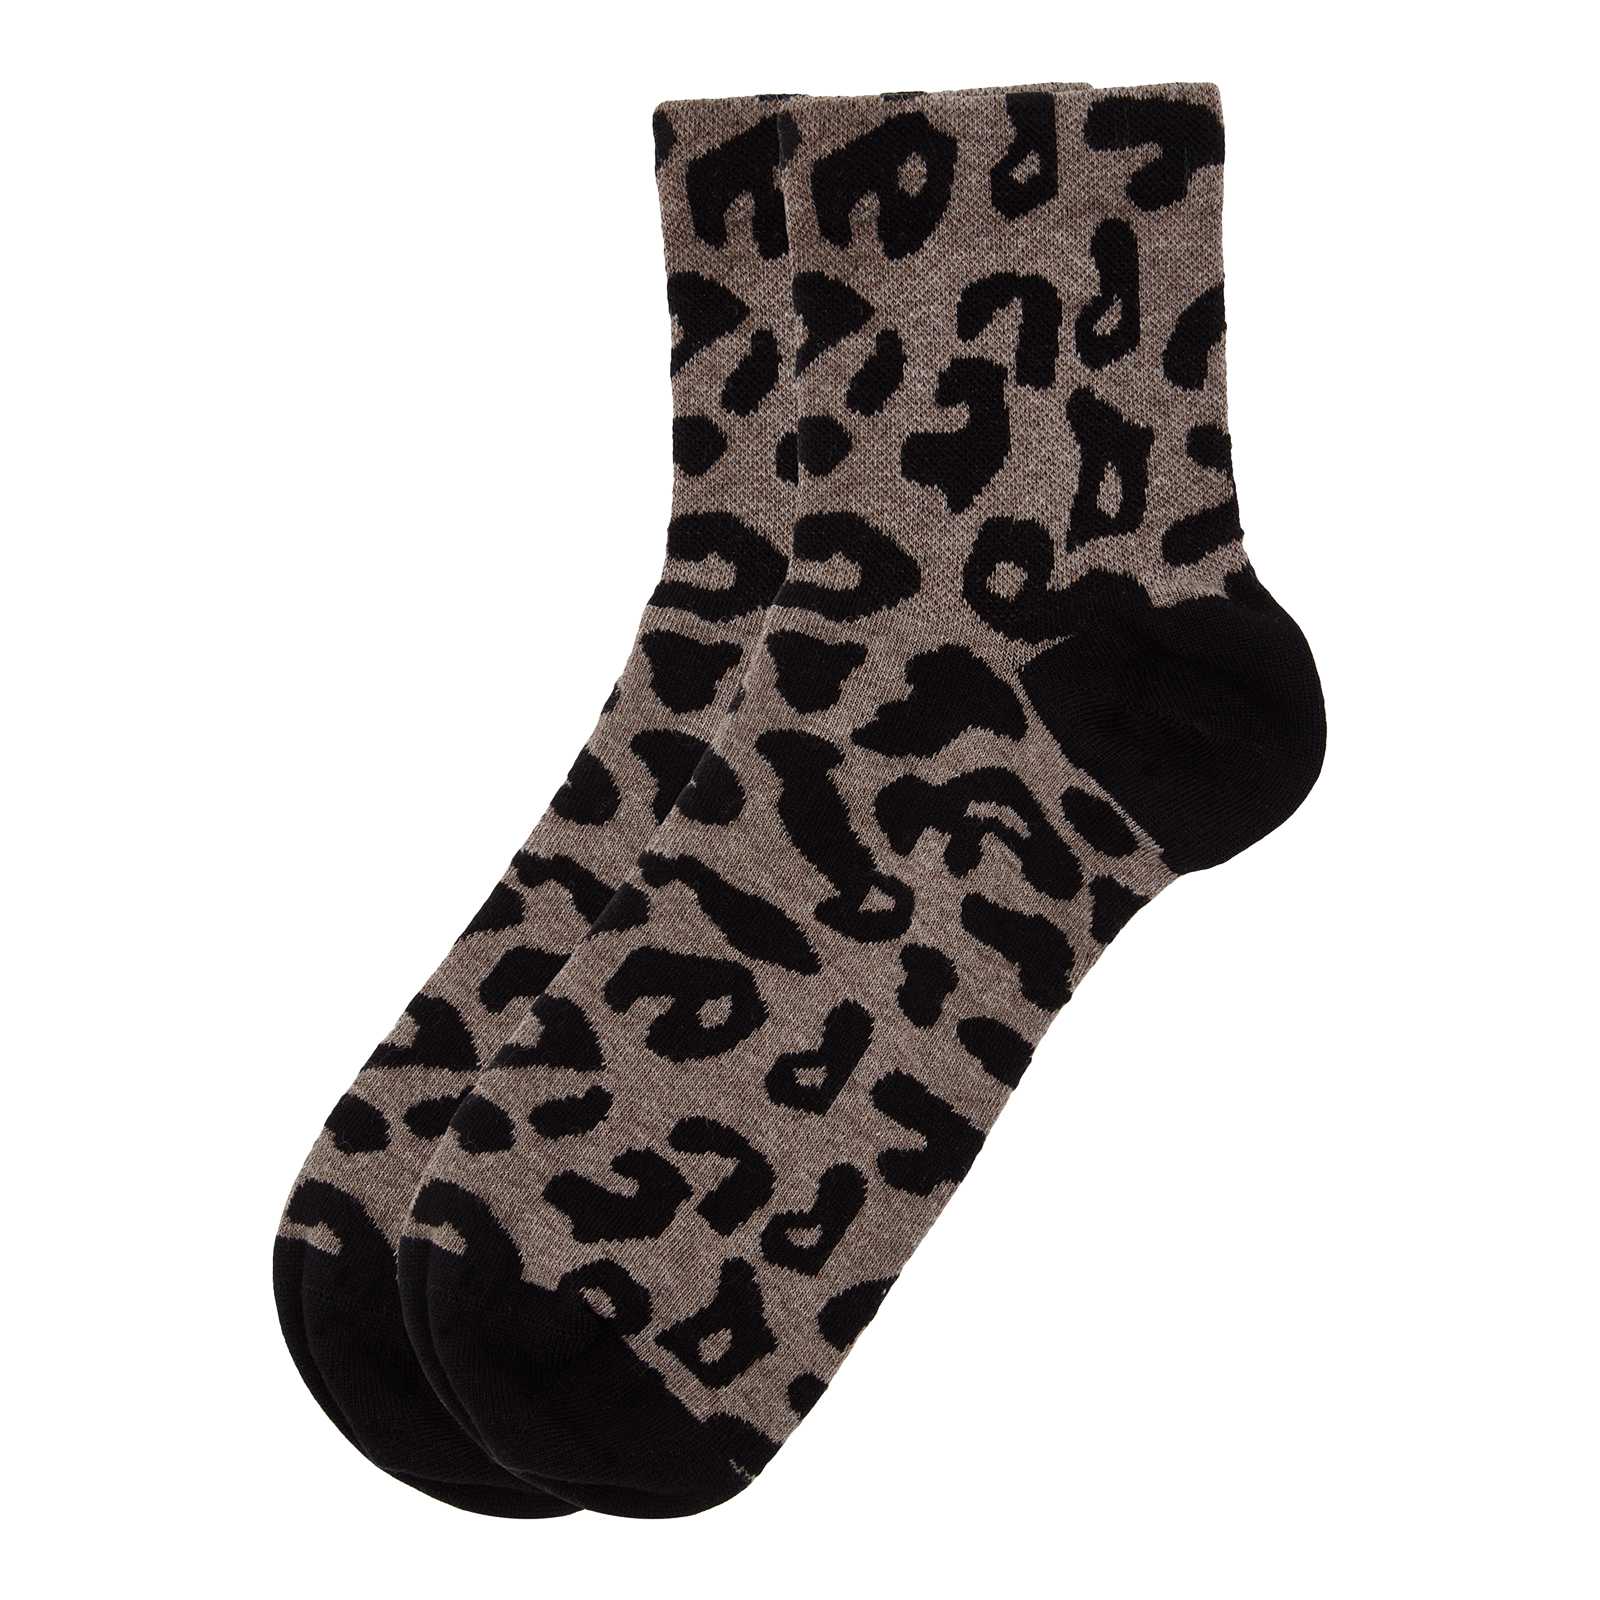 mahabis socks in leopard x skien black